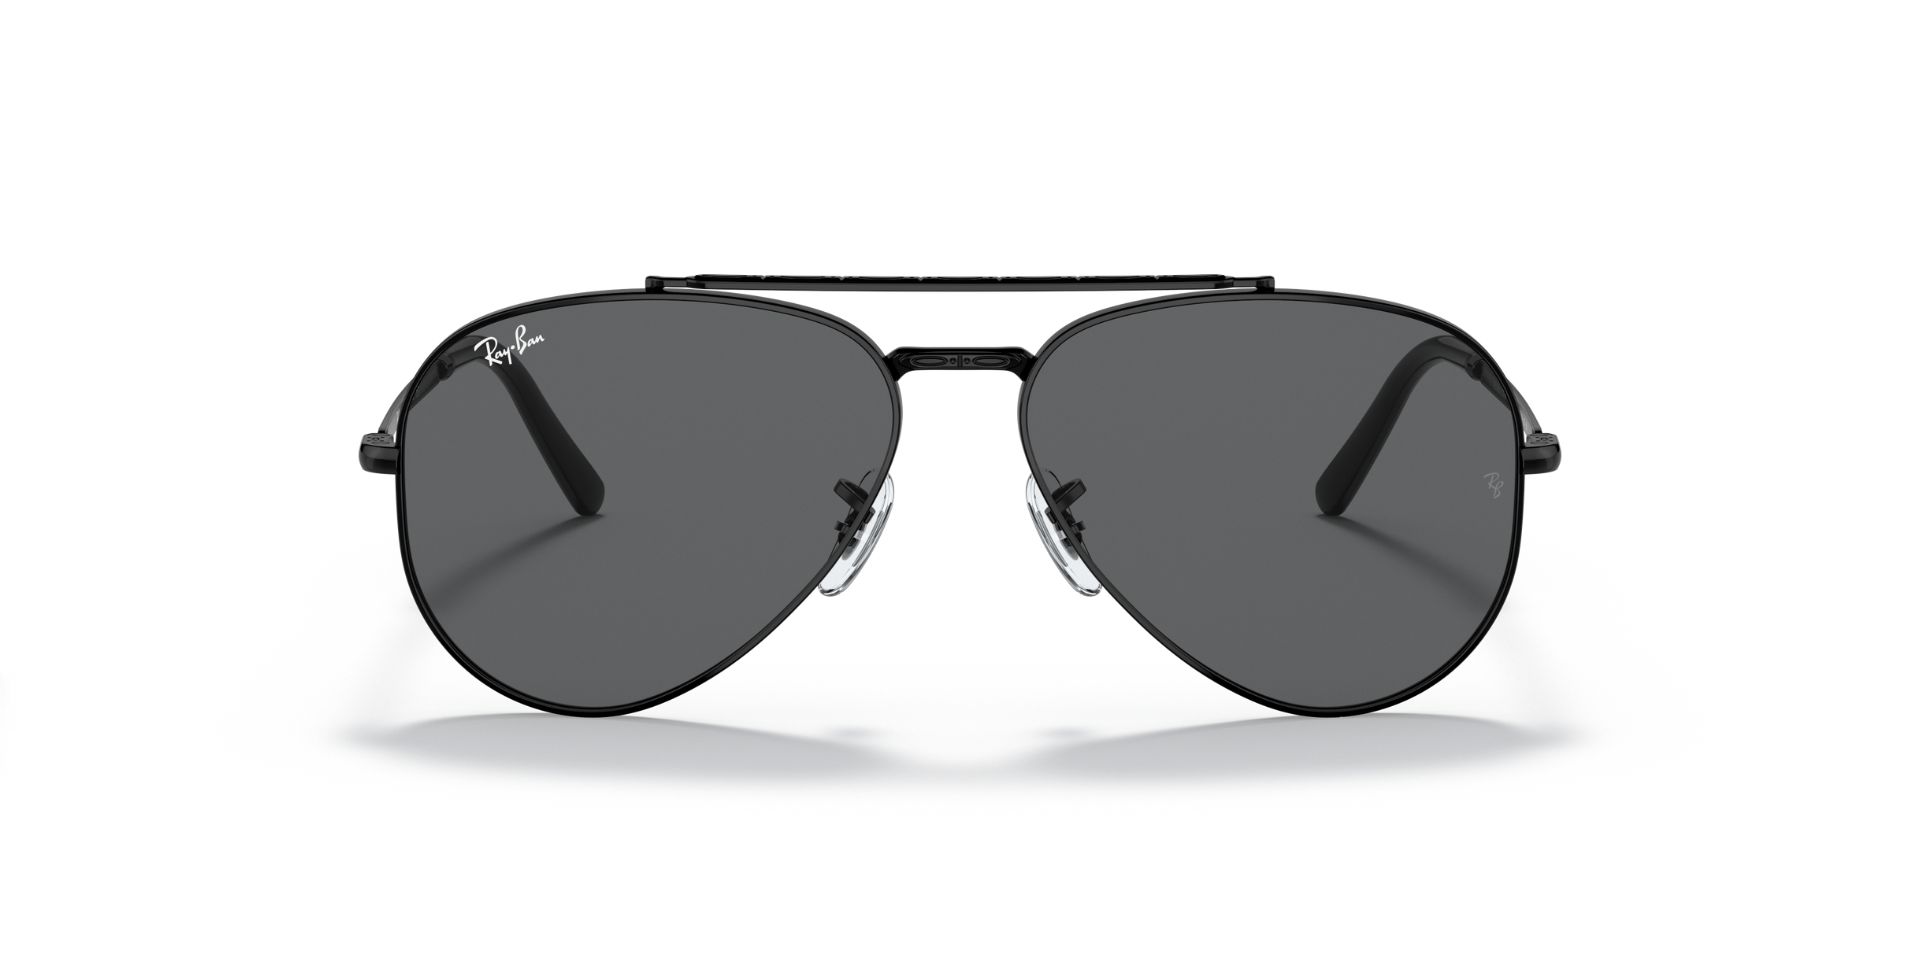 RB3625, rayban sunglasses, rayban unisex sunglasses